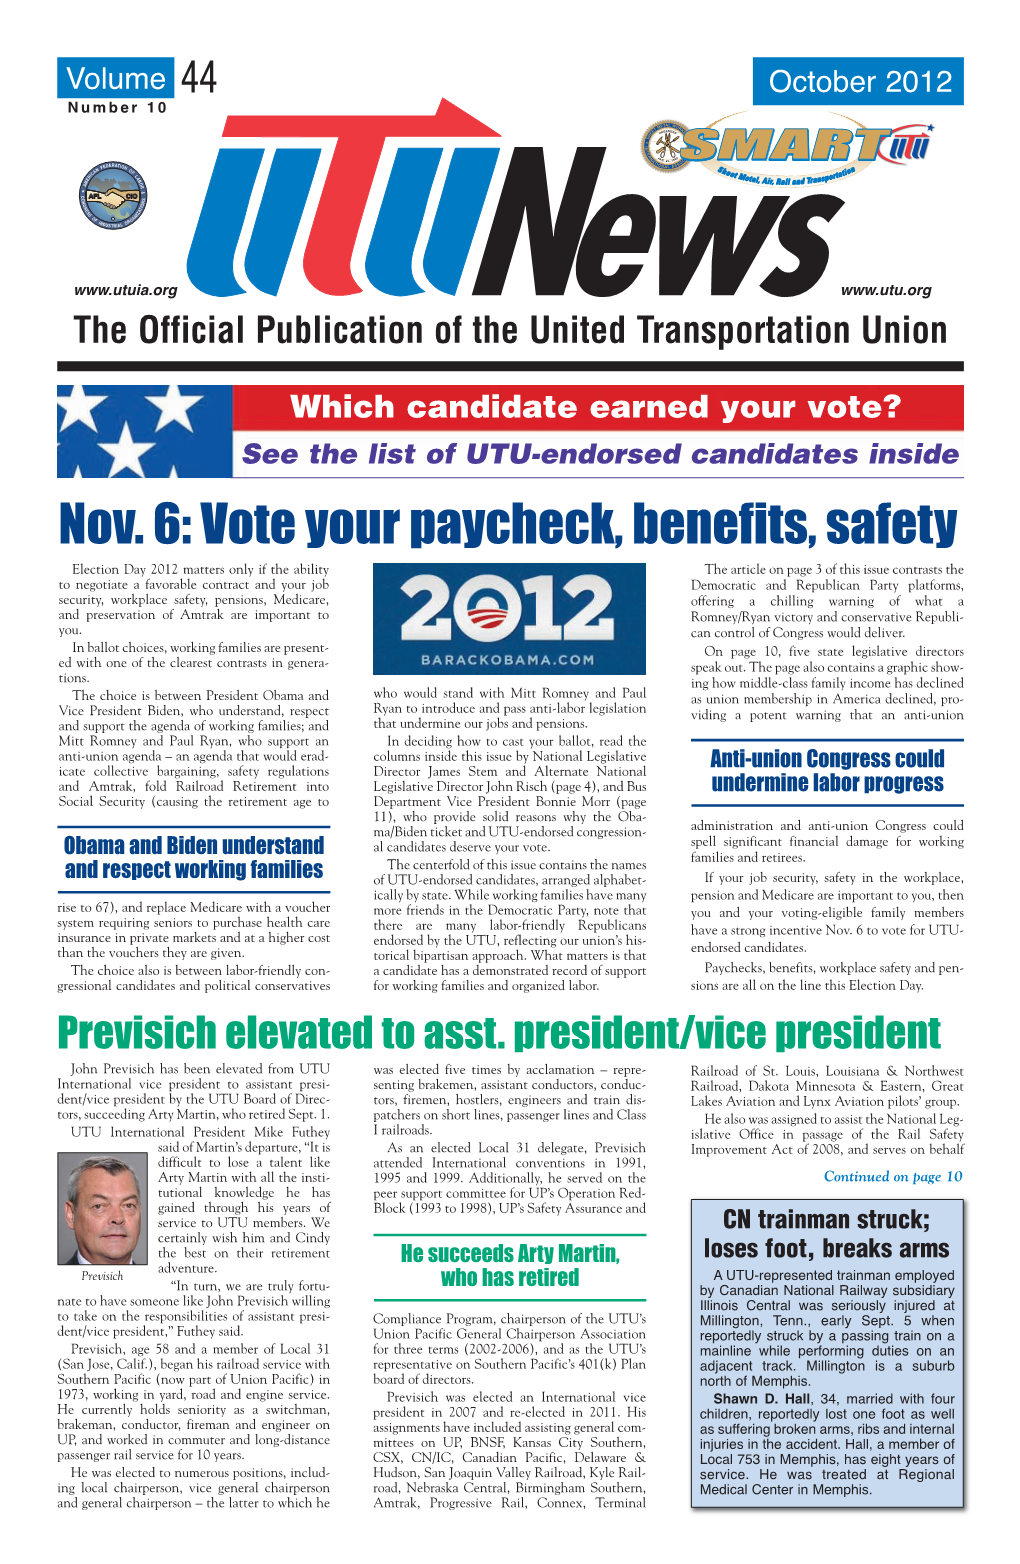 October 2012 SMART Transportation Newsletter